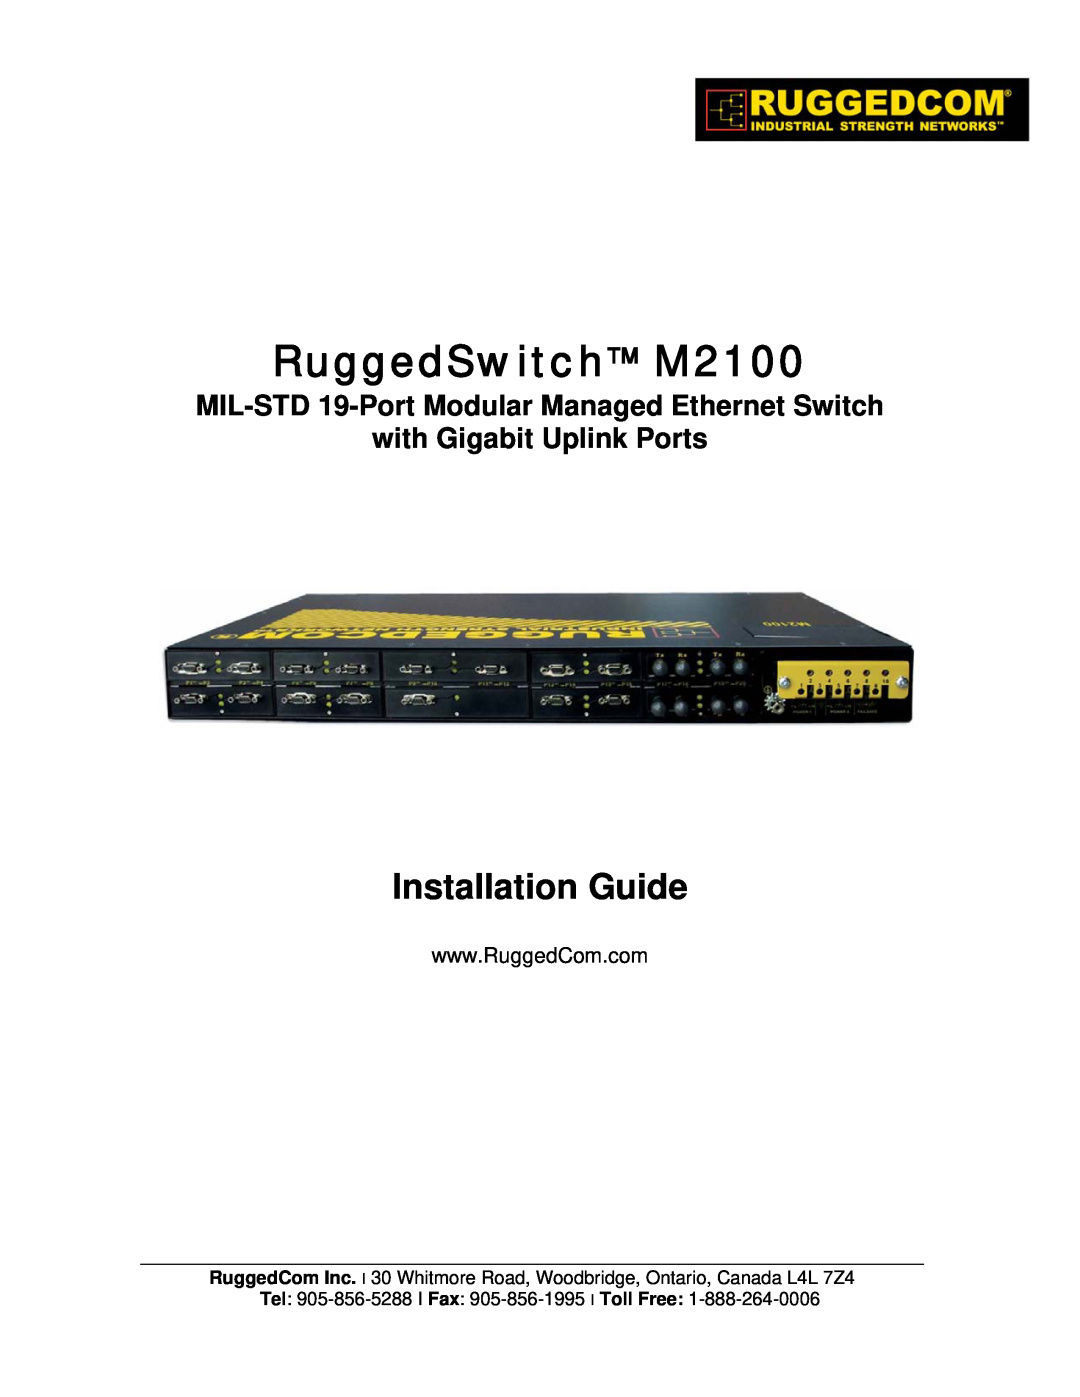 RuggedCom manual MIL-STD 19-Port Modular Managed Ethernet Switch, with Gigabit Uplink Ports, RuggedSwitch M2100 